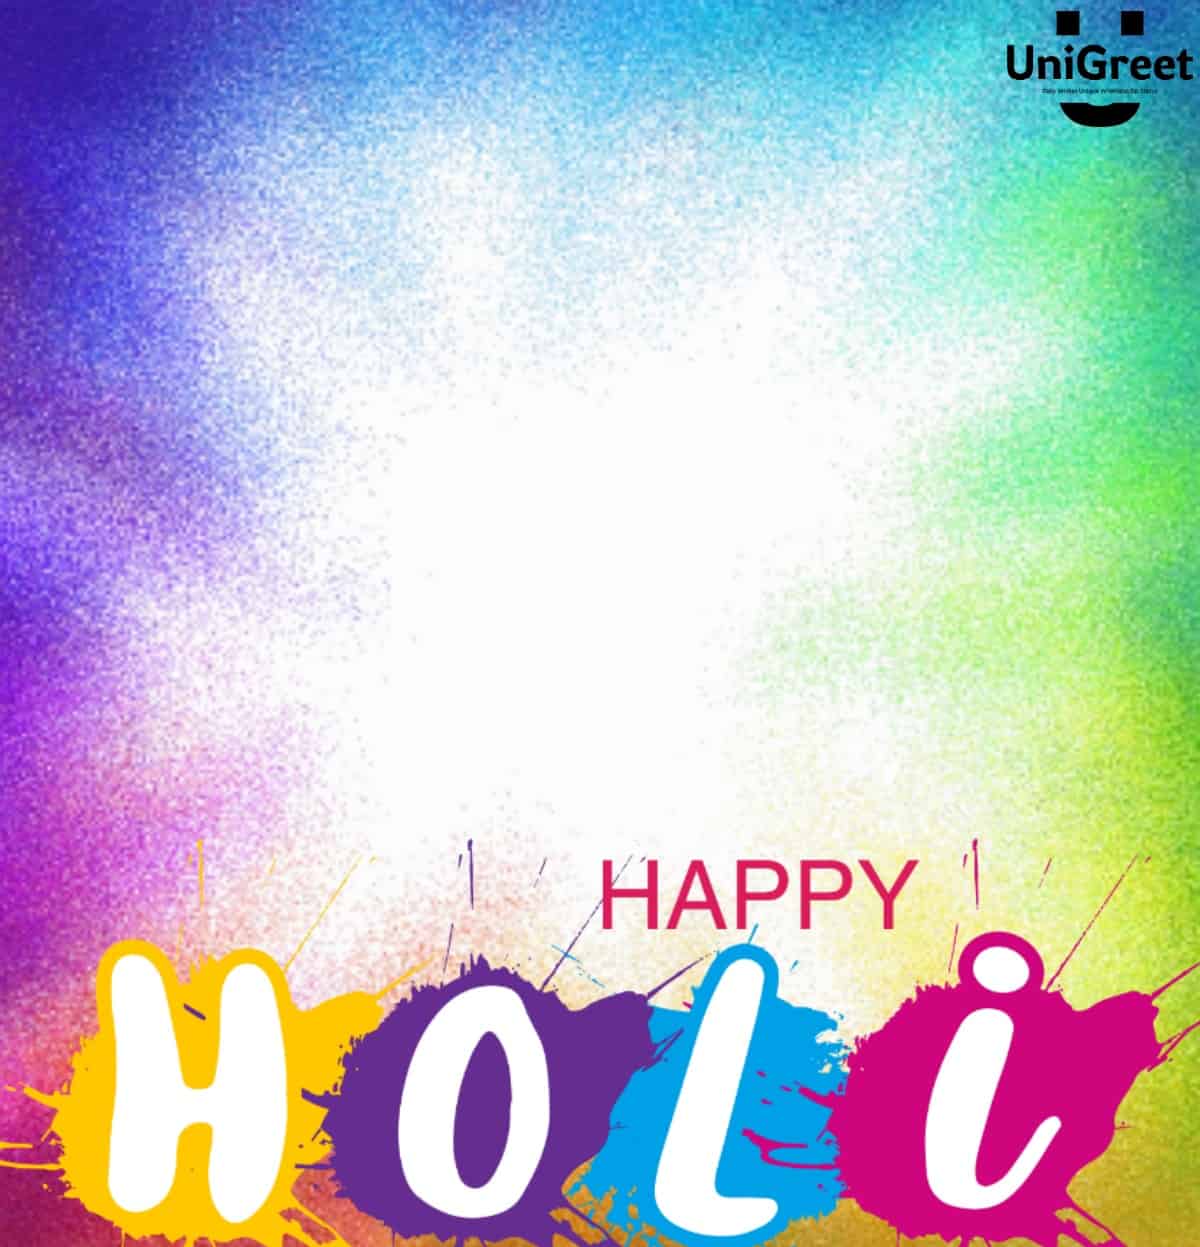 happy holi background images hd